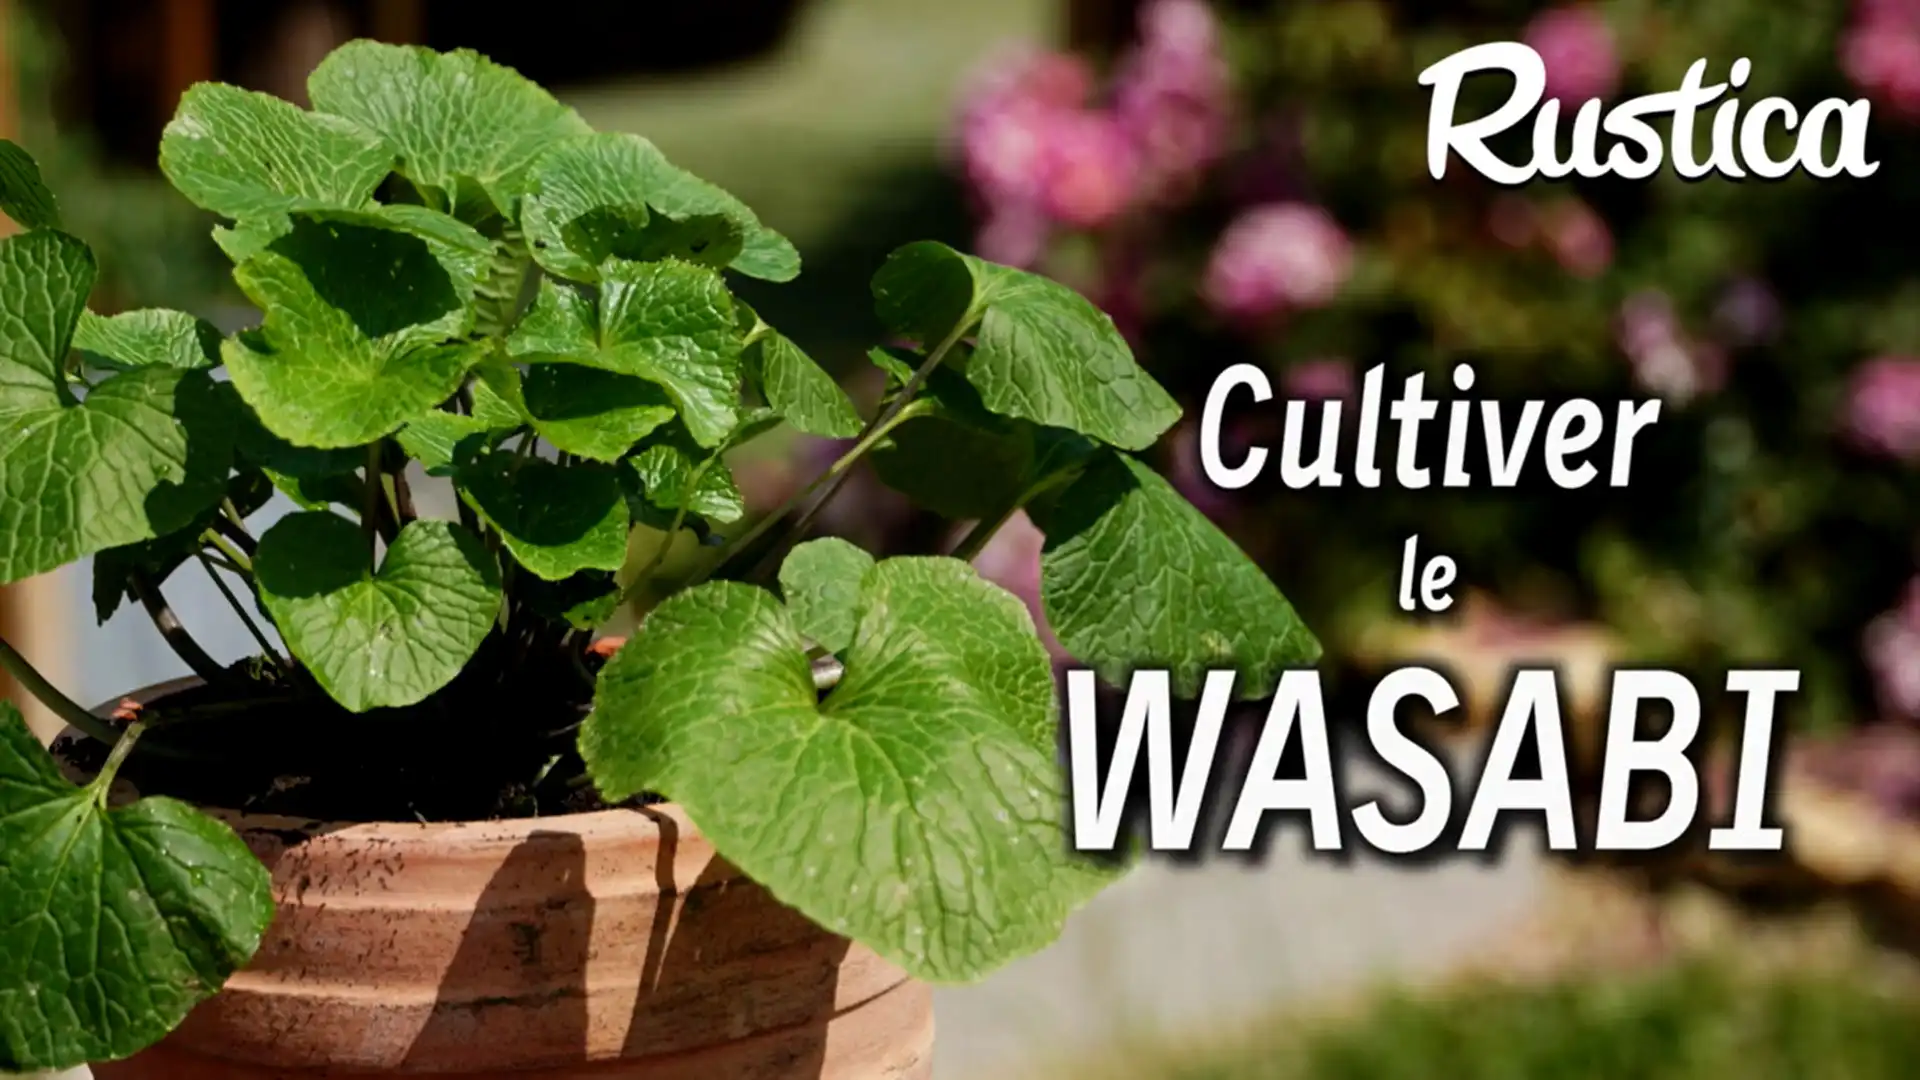 Le wasabi - L'actu piquante